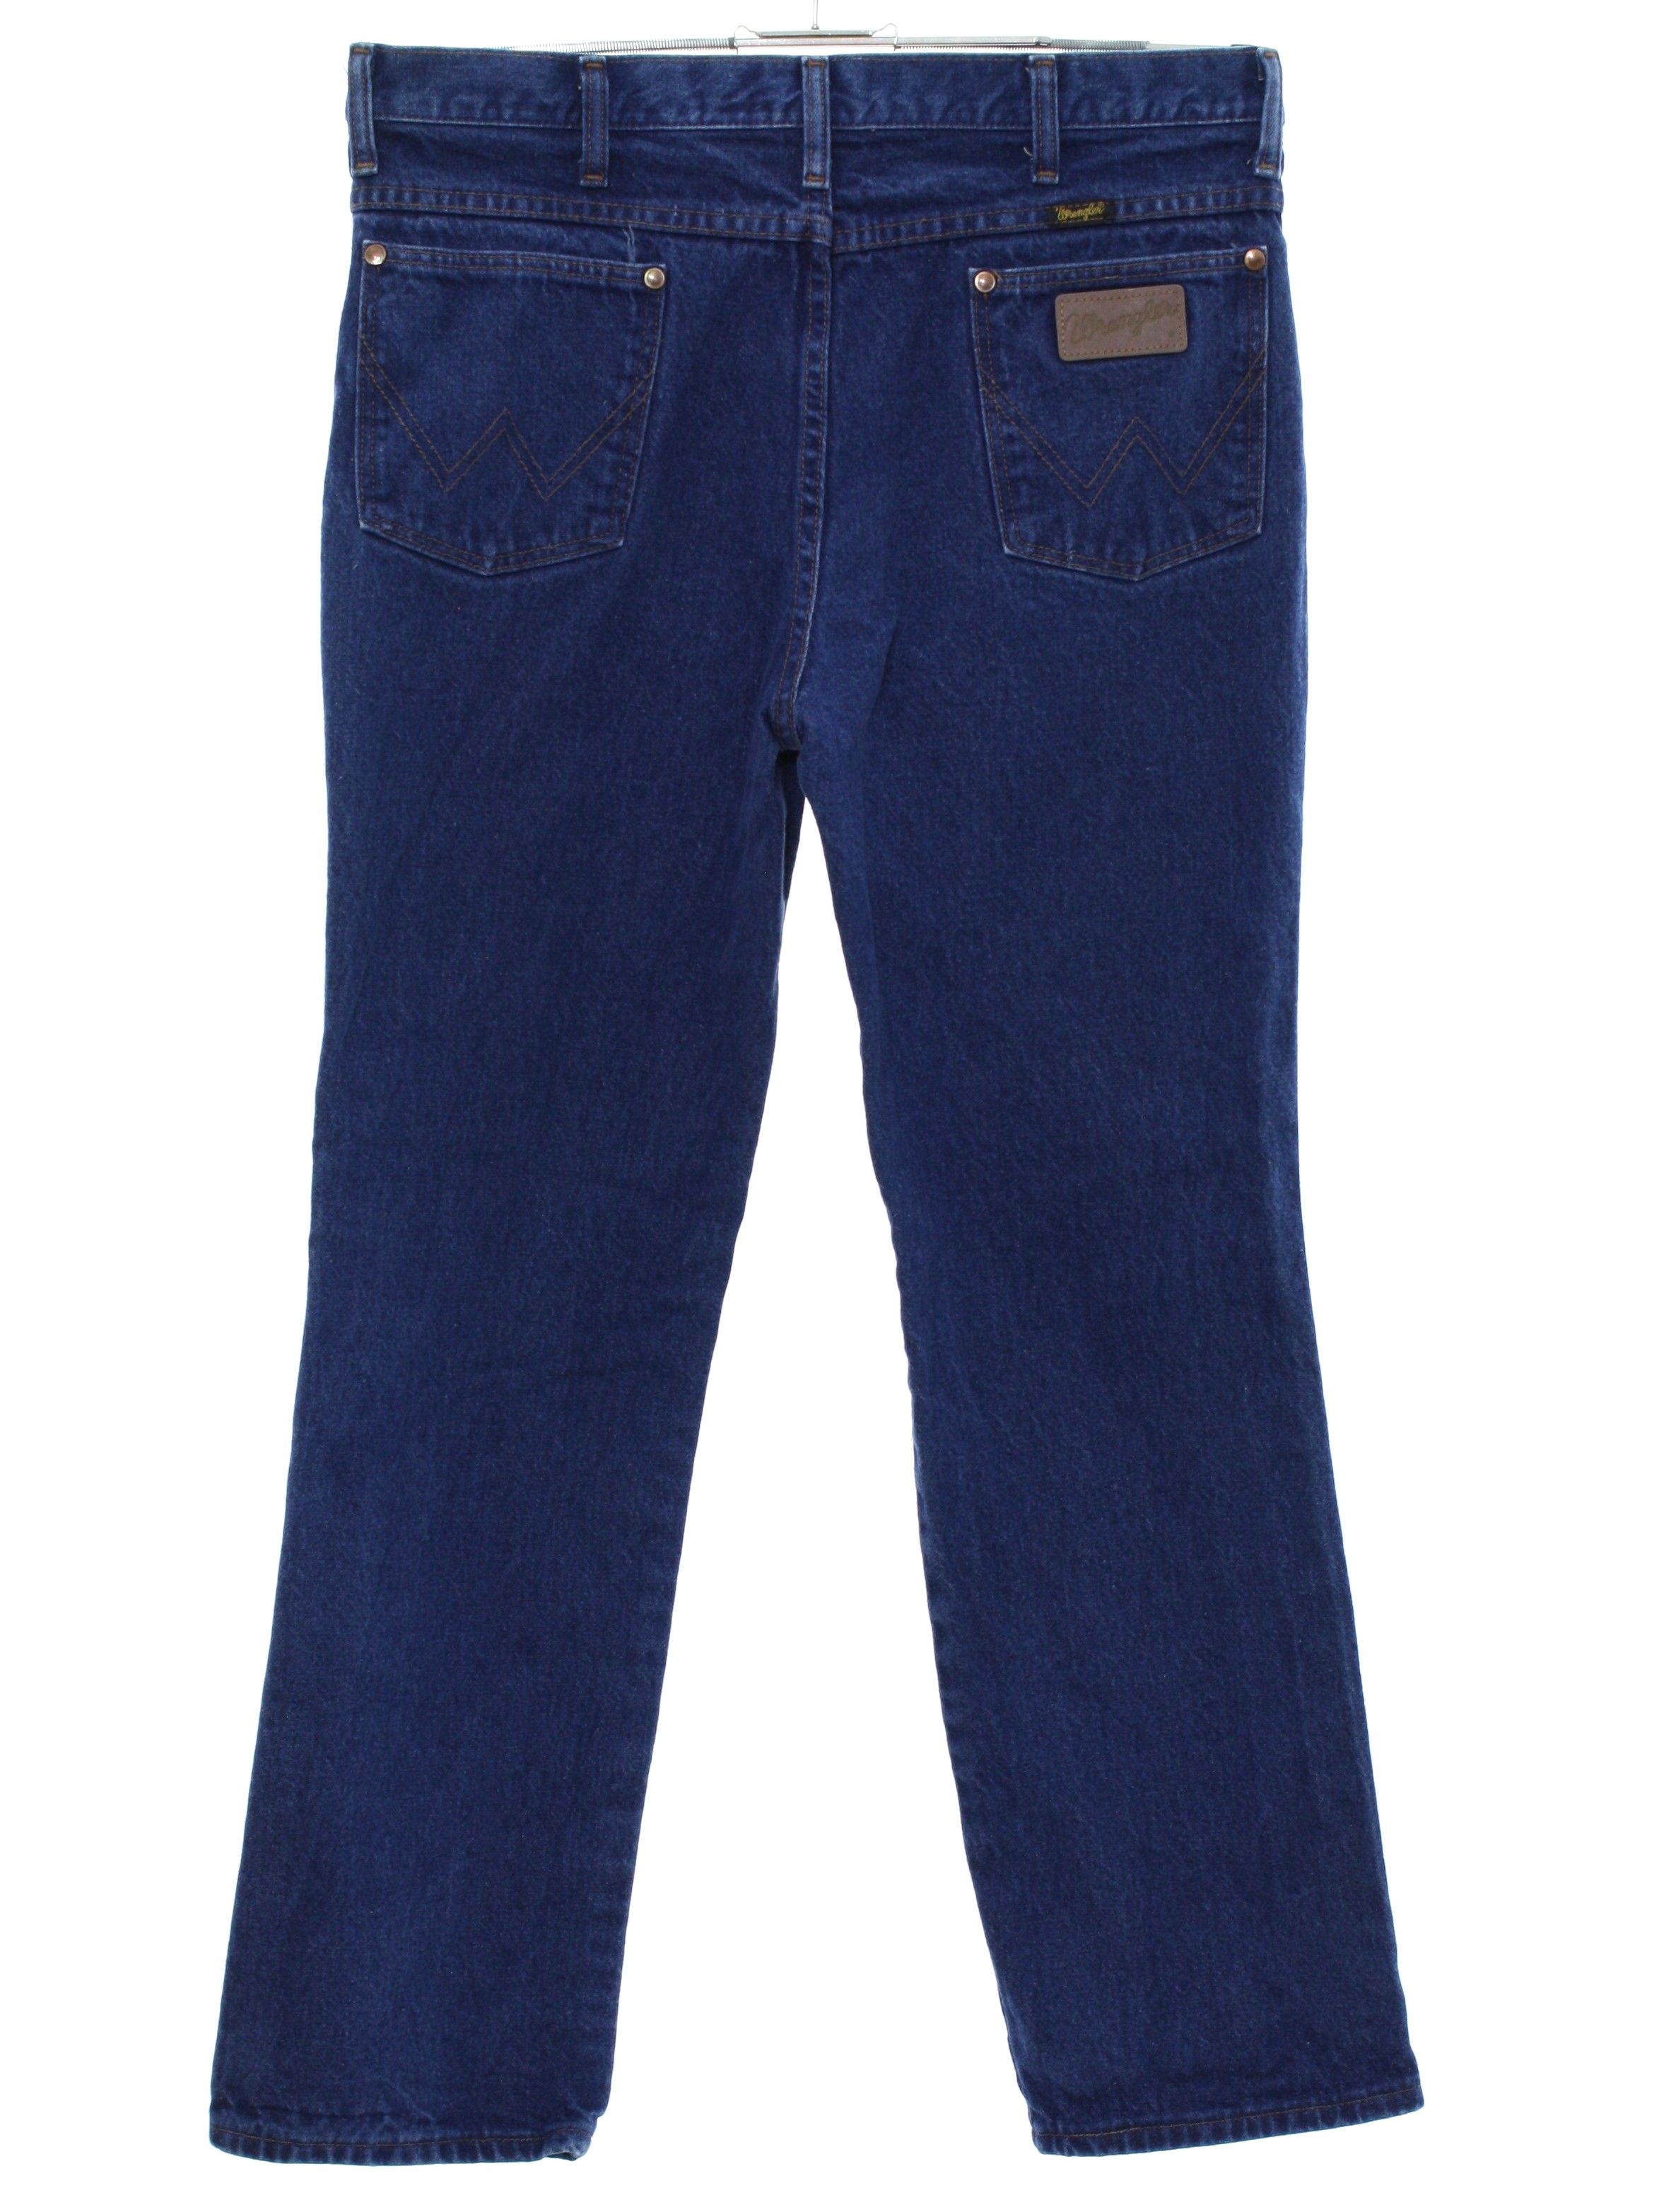 1980s Vintage Pants: 80s -Wrangler- Mens blue cotton denim straight leg ...